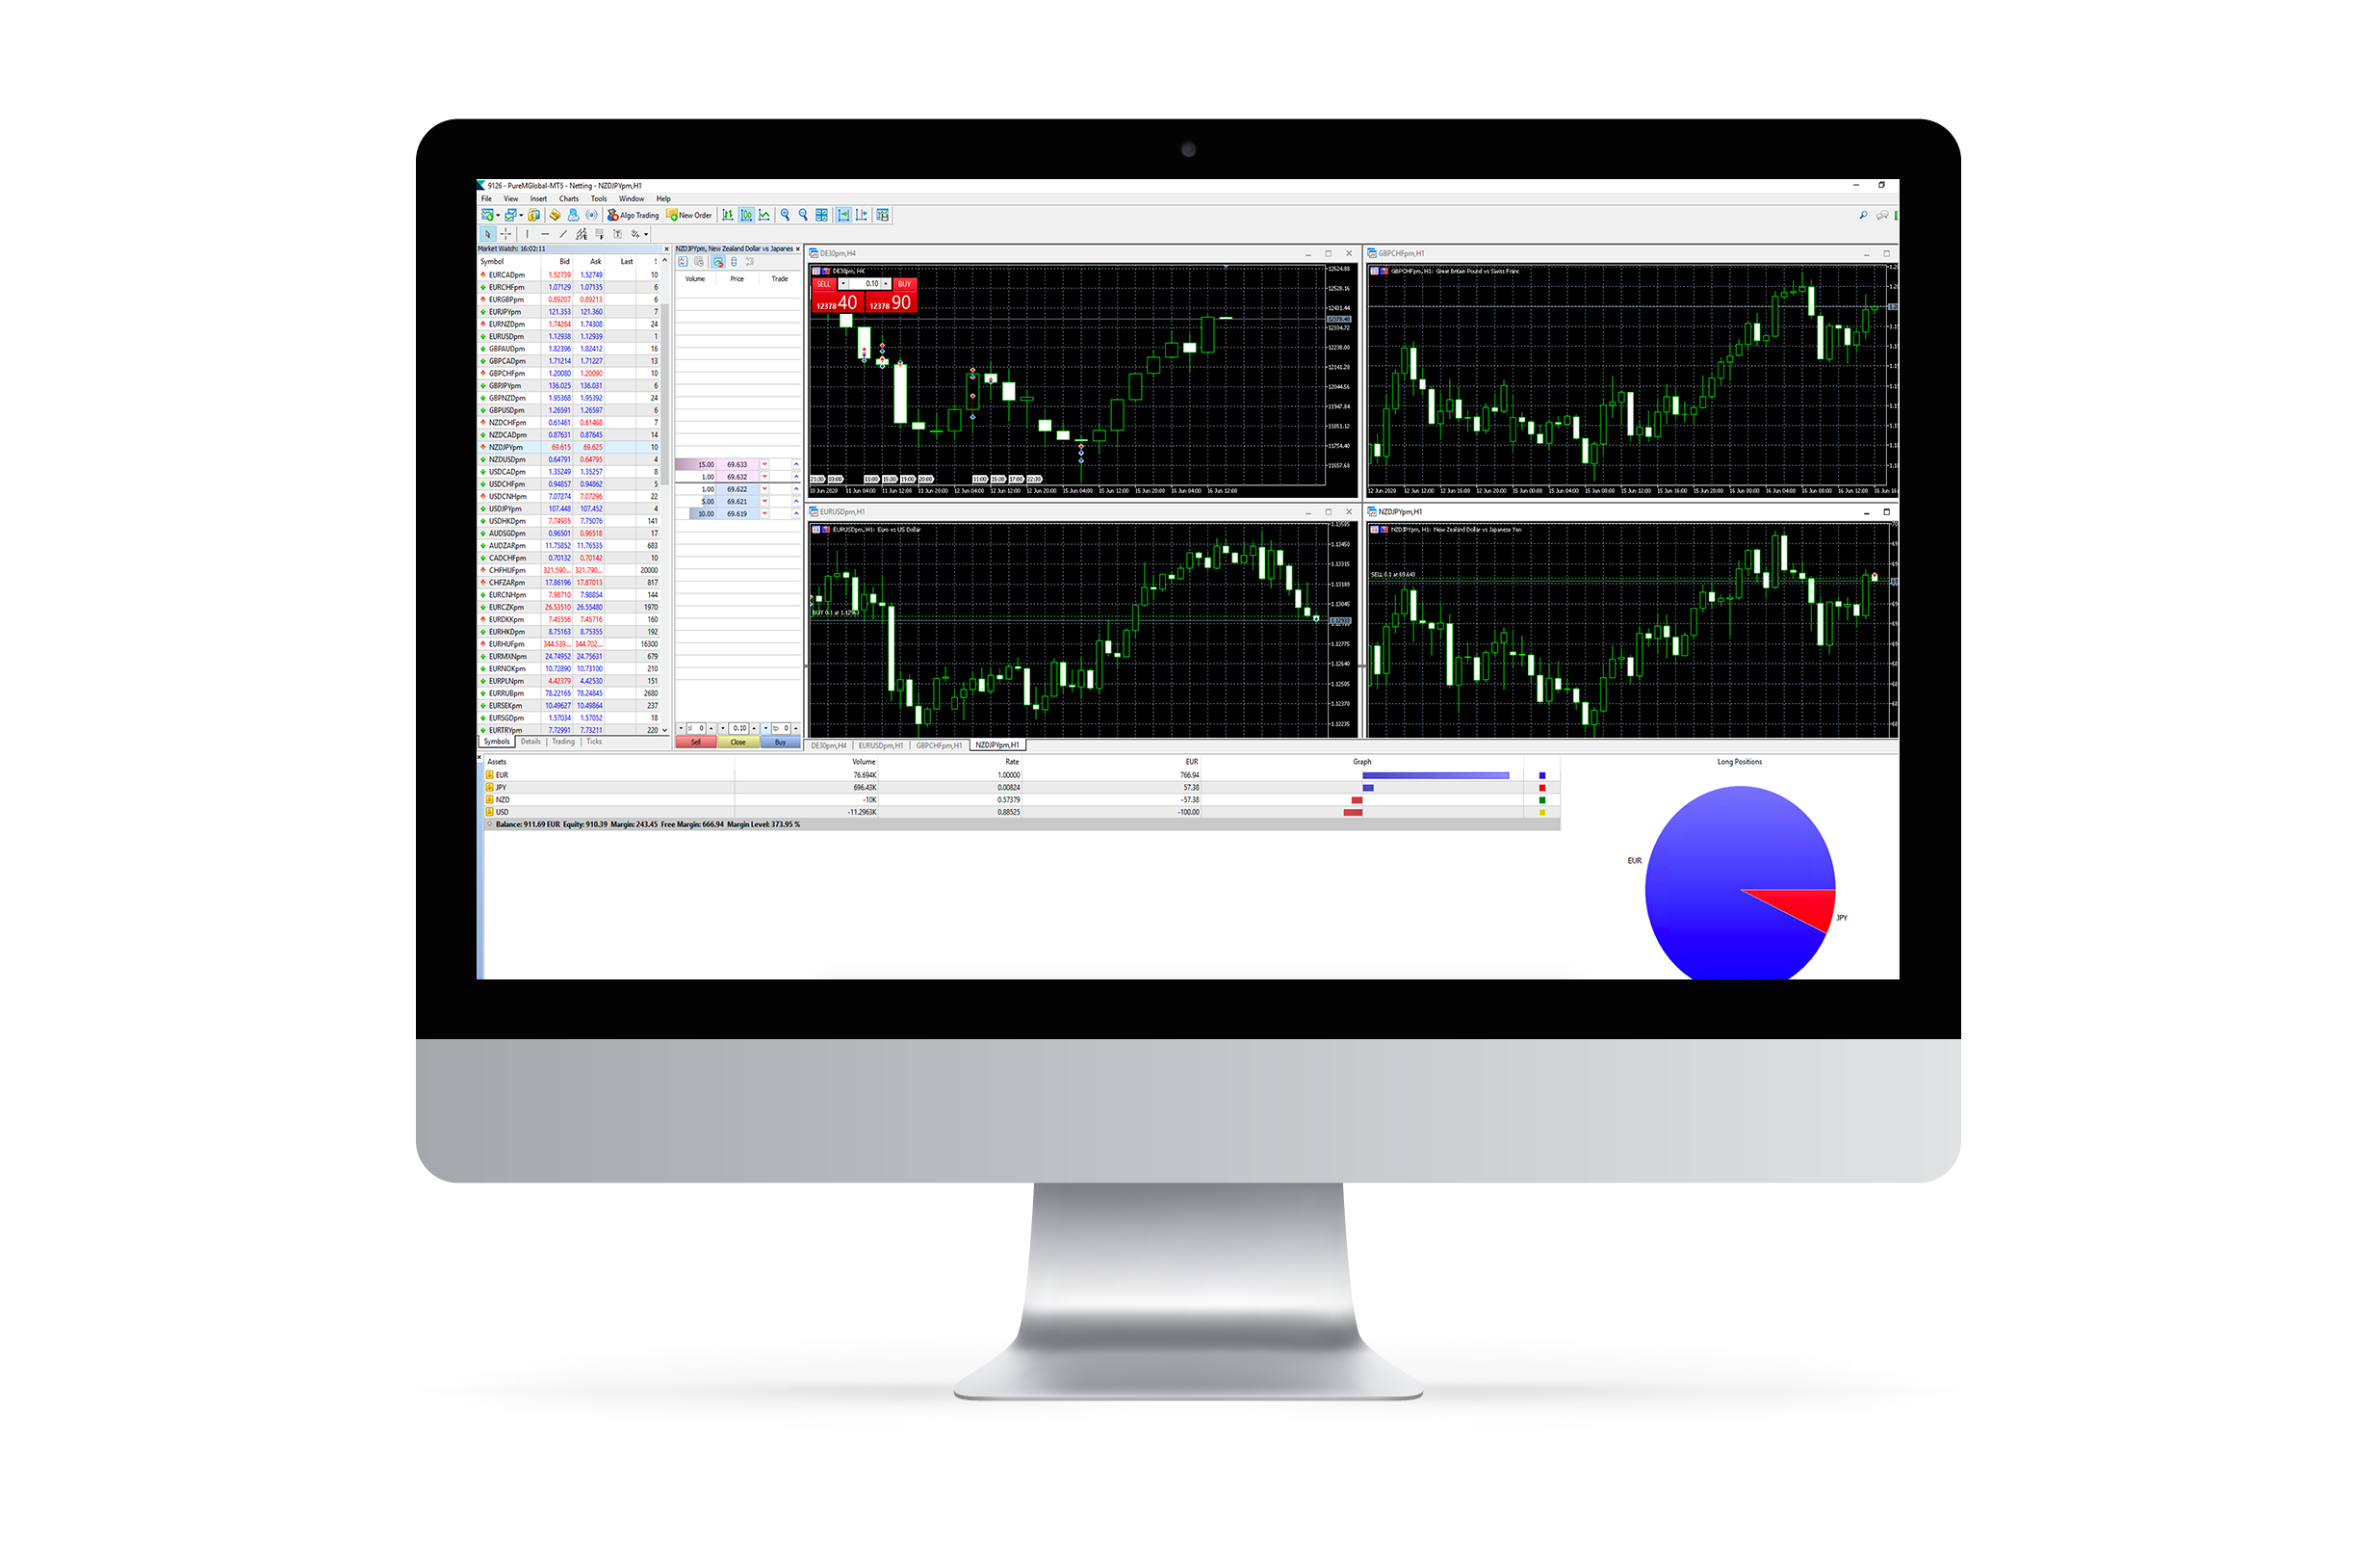 Download the MetaTrader 5 trading platform for free